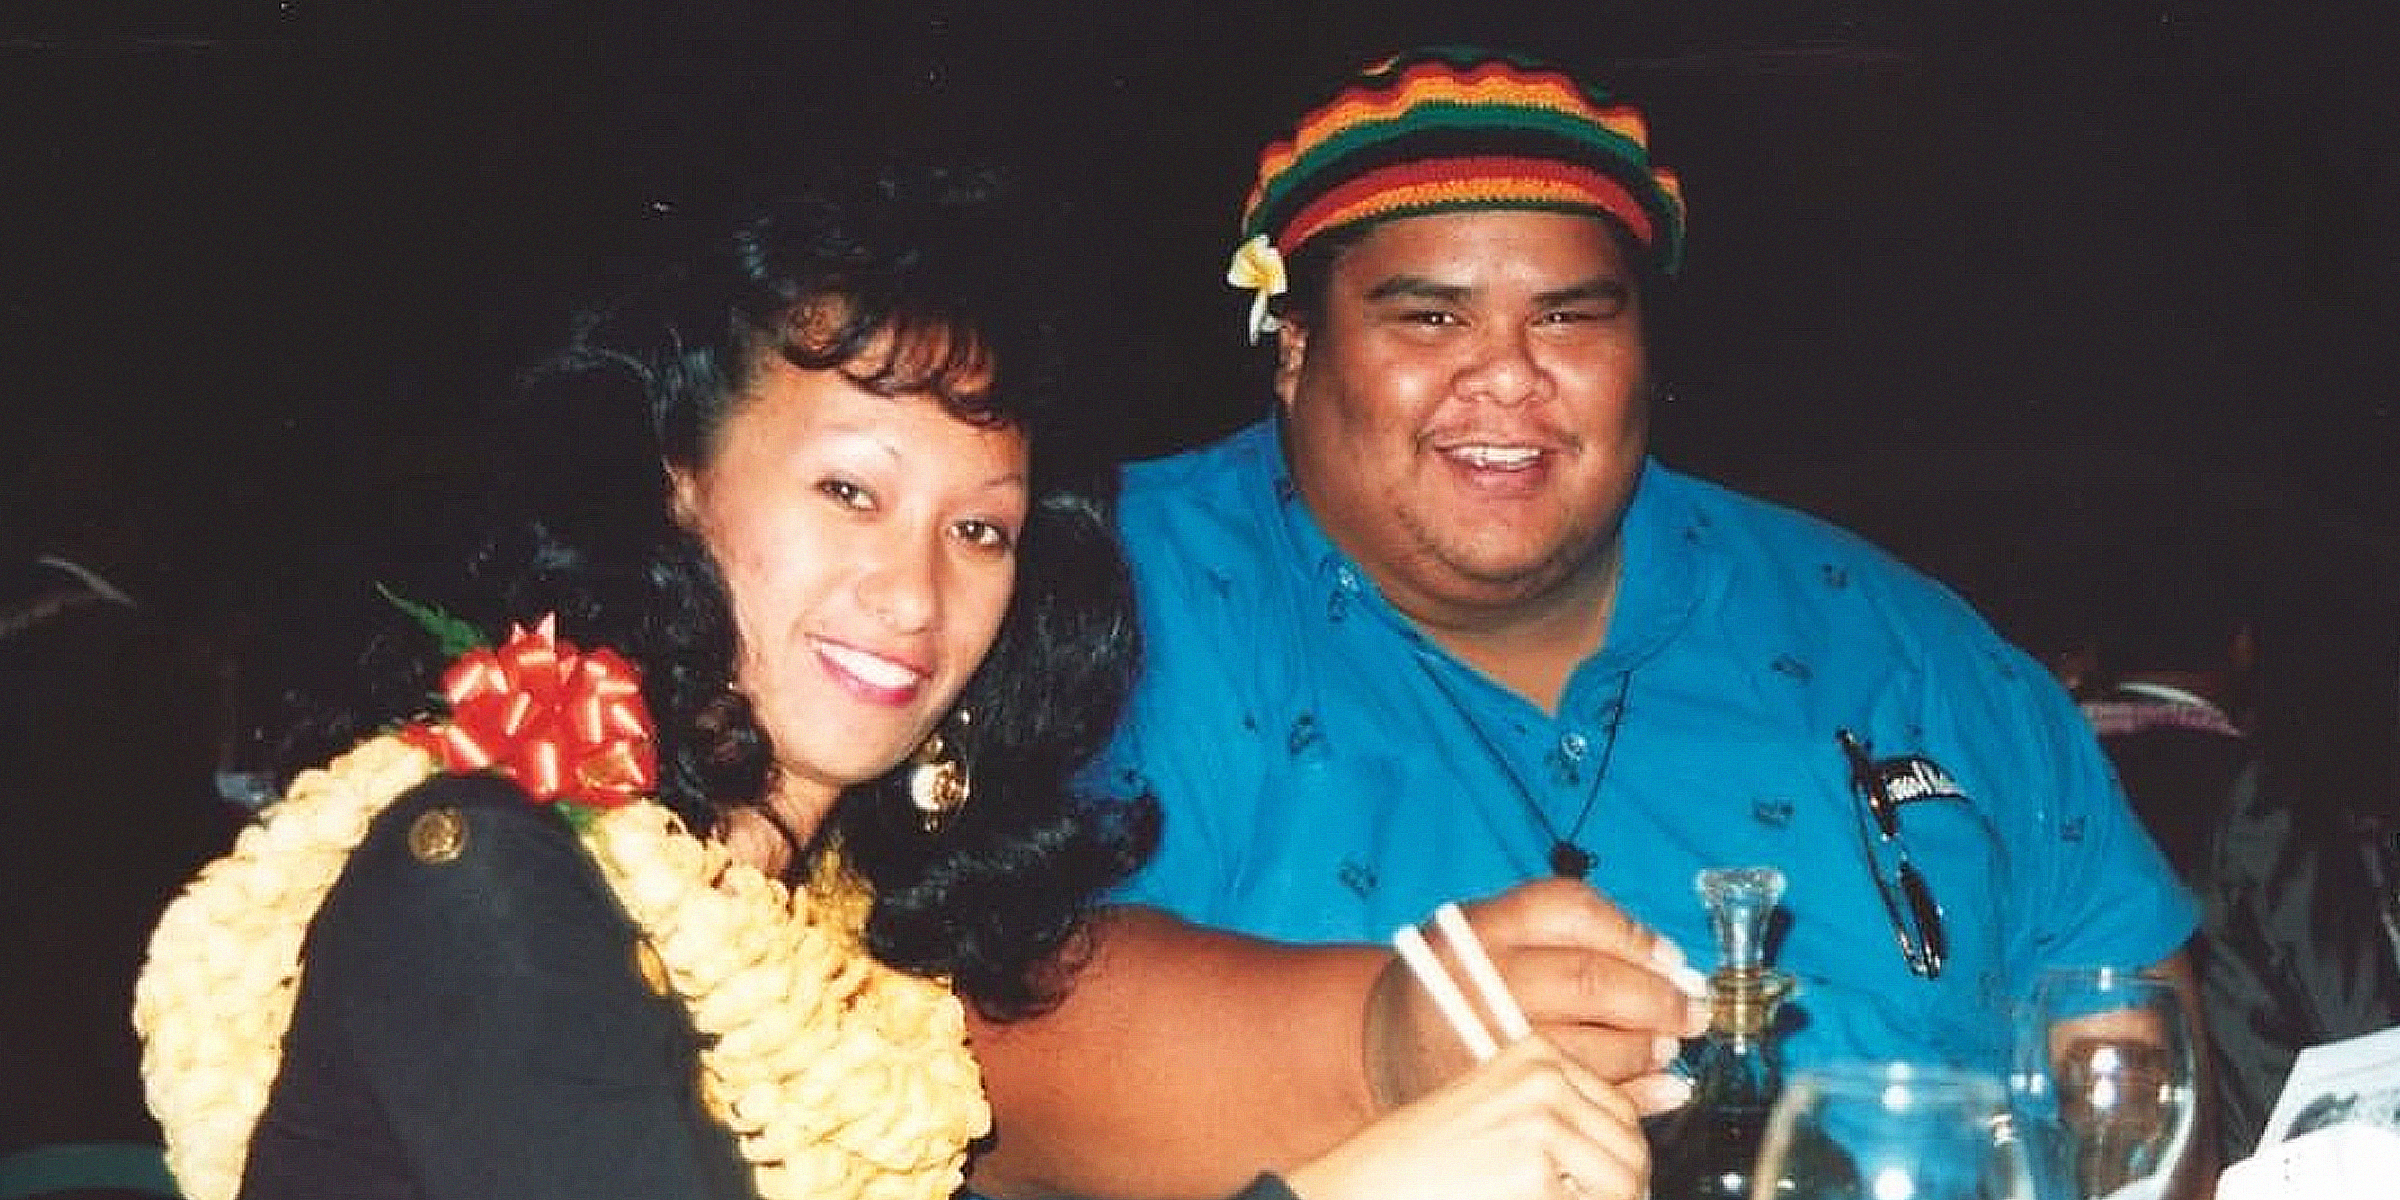 Marlene and Israel Kamakawiwoʻole | Source: Instagram.com/officializhawaii